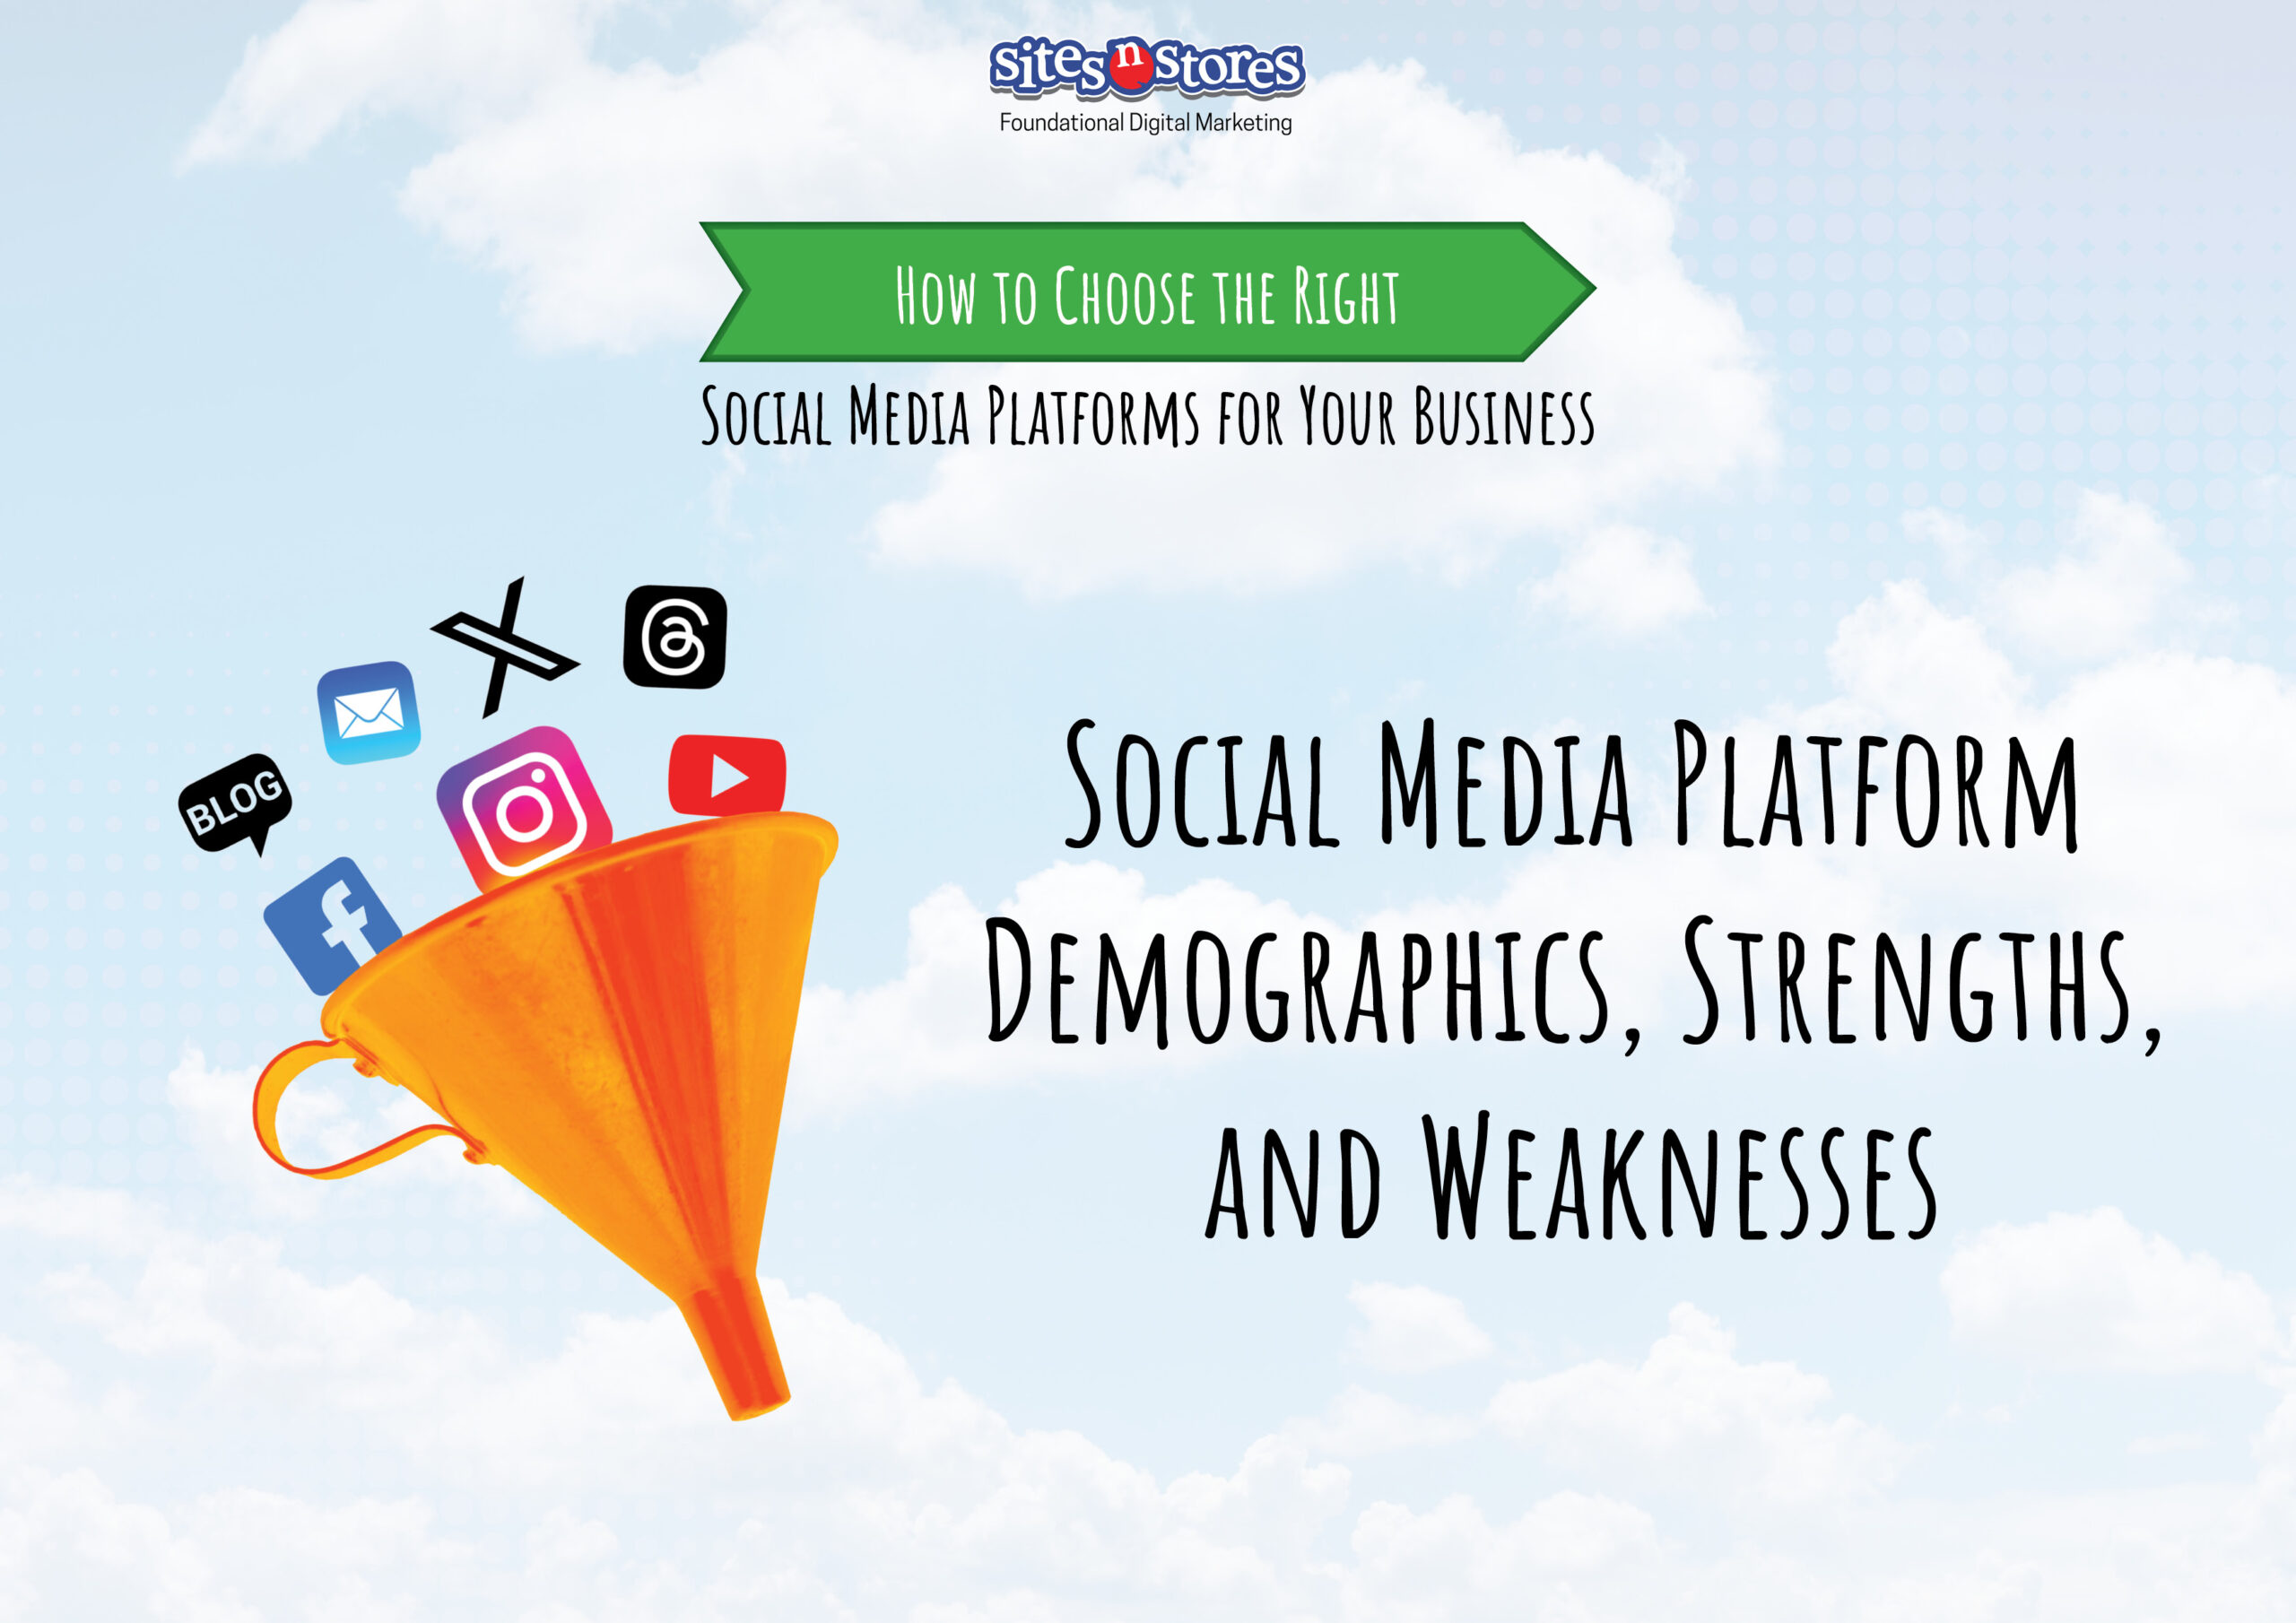 Social Media Platform Demographics, Strengths, and Weaknesses